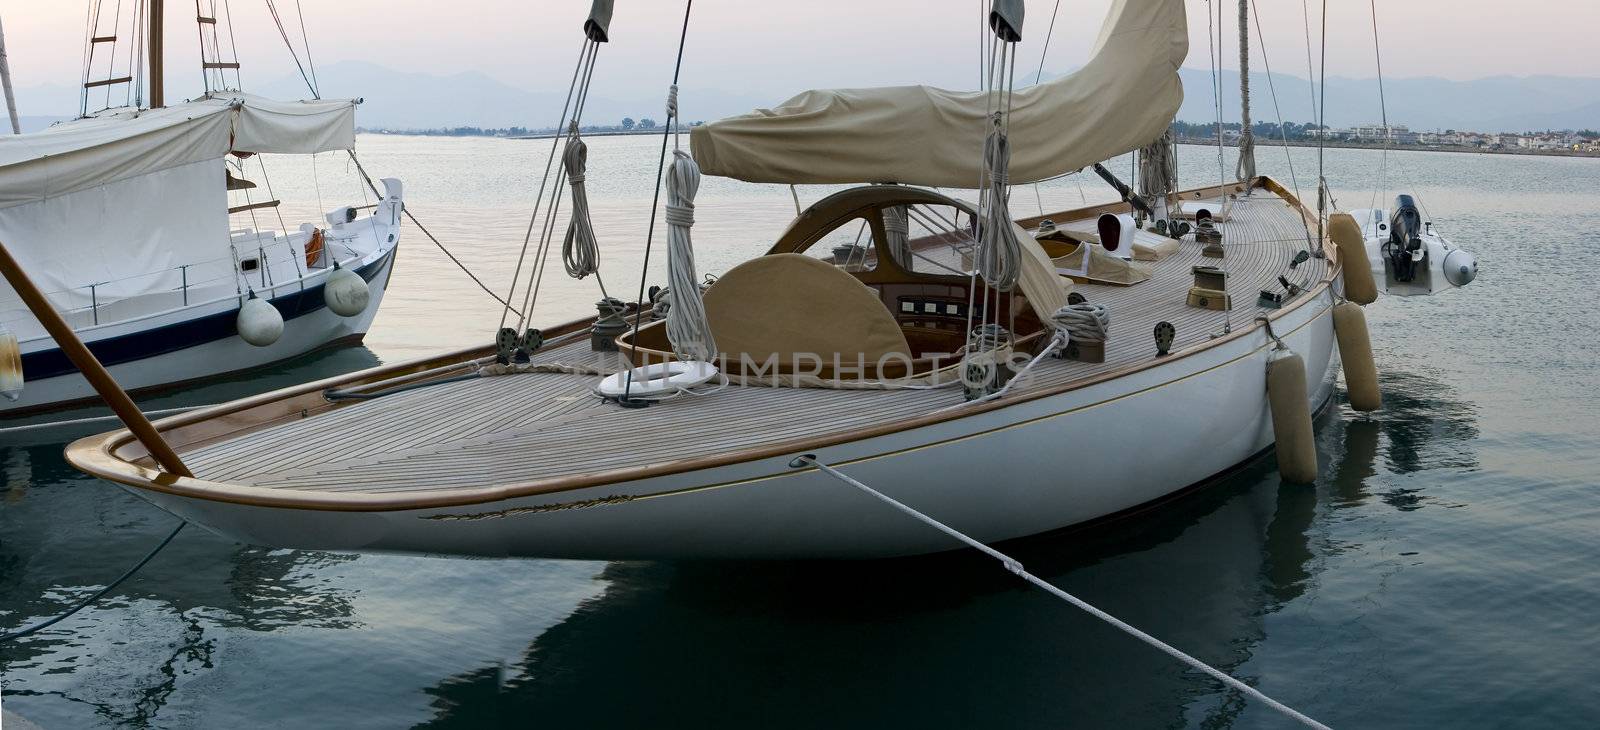 yacht  in the dock by Trebuchet